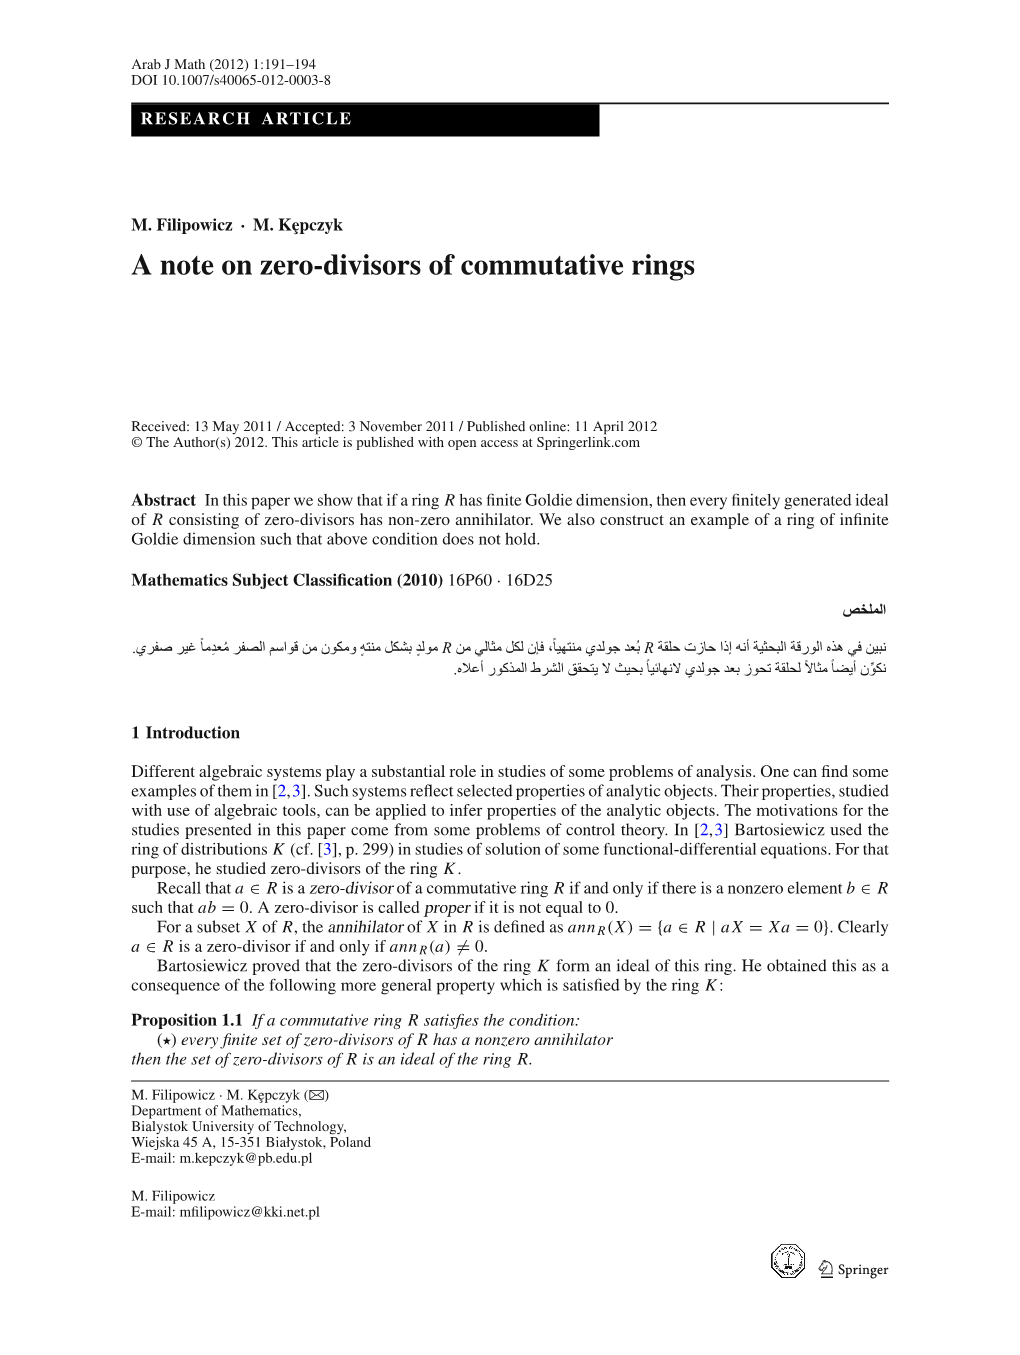 A Note on Zero-Divisors of Commutative Rings